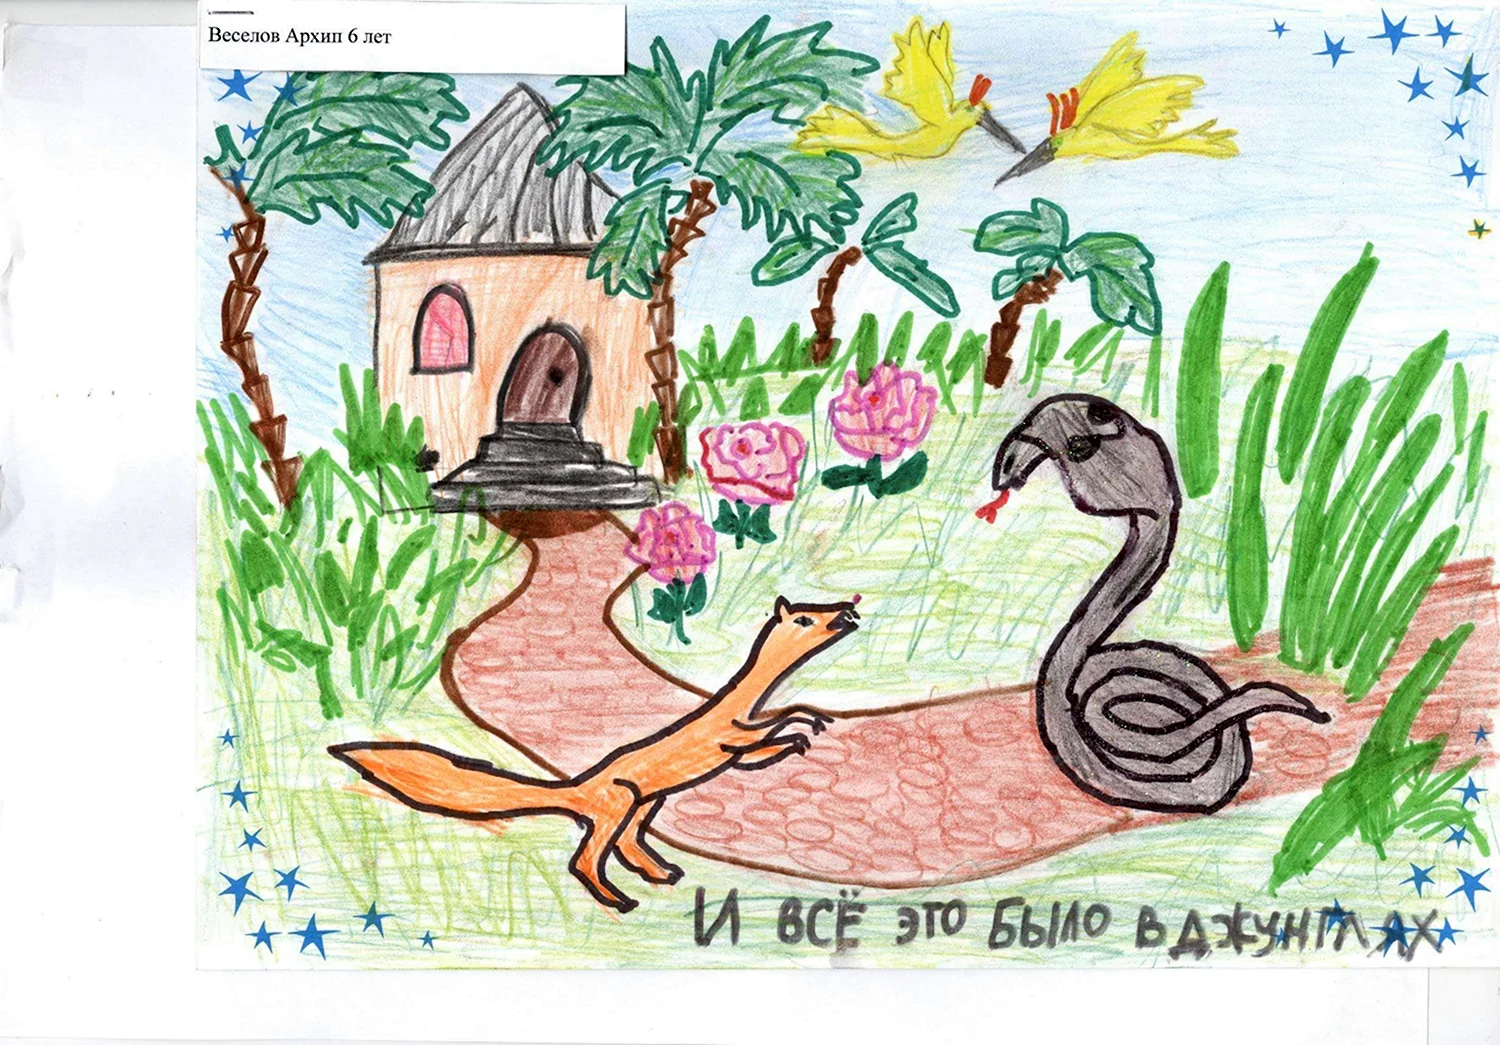 Рики тики тави читательский дневник. Иллюстрация к сказке Рикки Тикки Тави. Рисунок на тему Рикки Тикки Тави. Рикки Тикки Тави рисунок для детей. Рики Тики Тави рисунок.